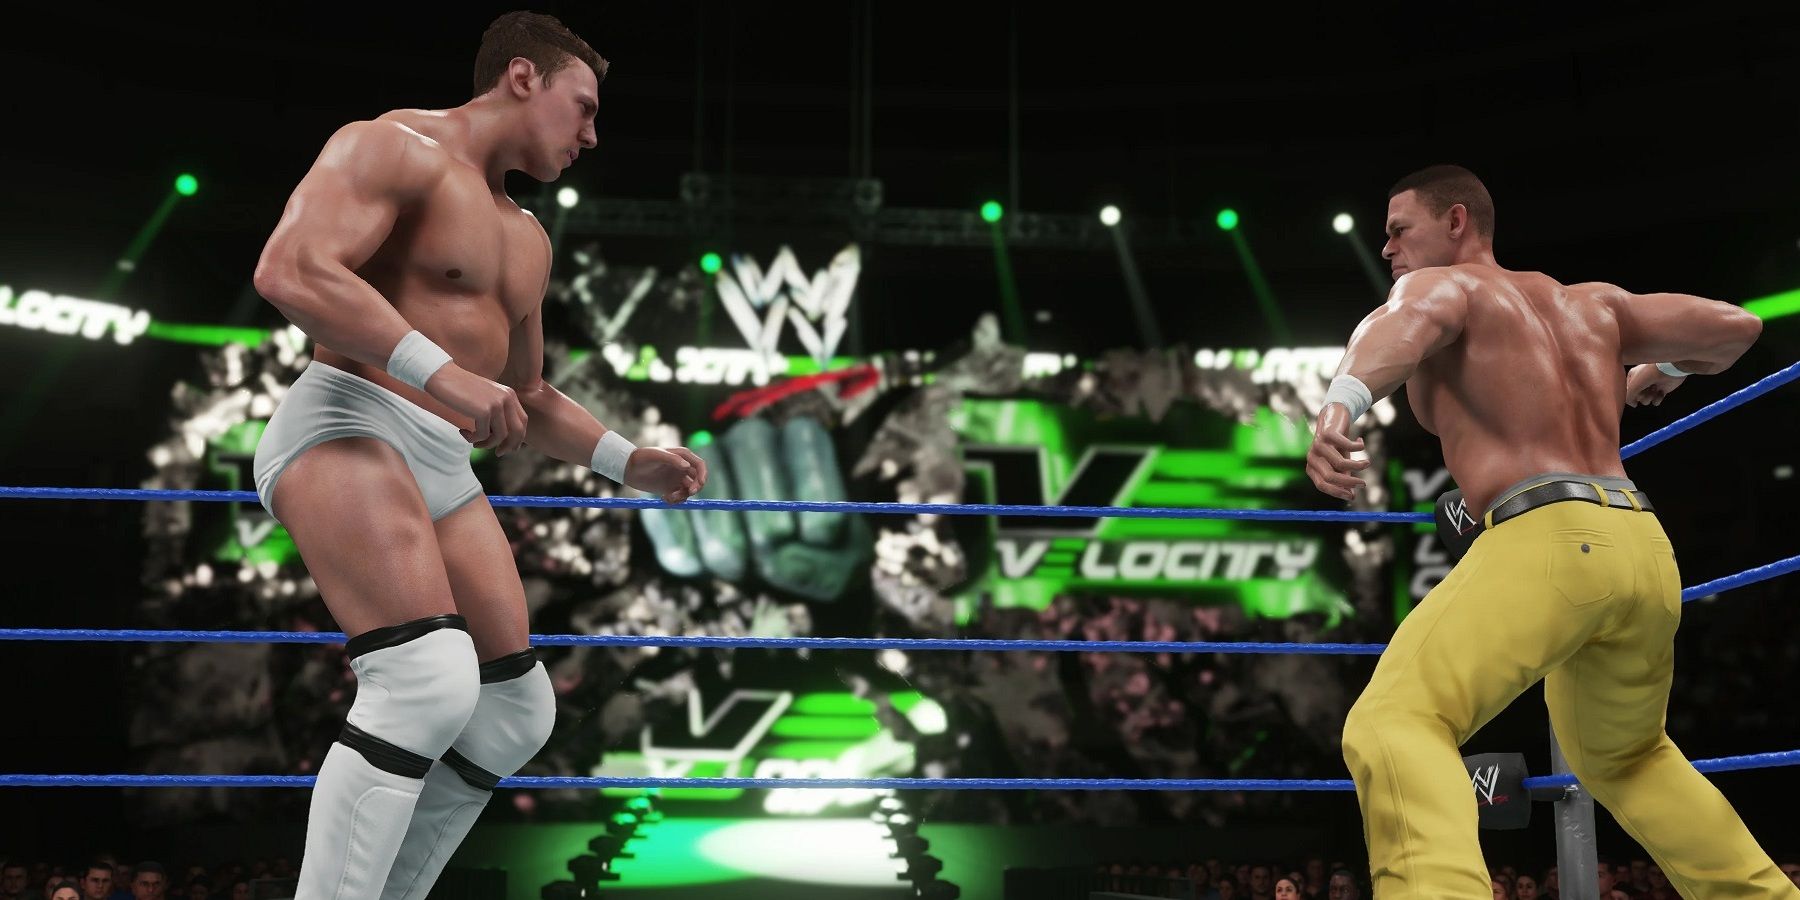 WWE-2K19 Daniel Bryan v John Cena in a Bryan's Showcase match